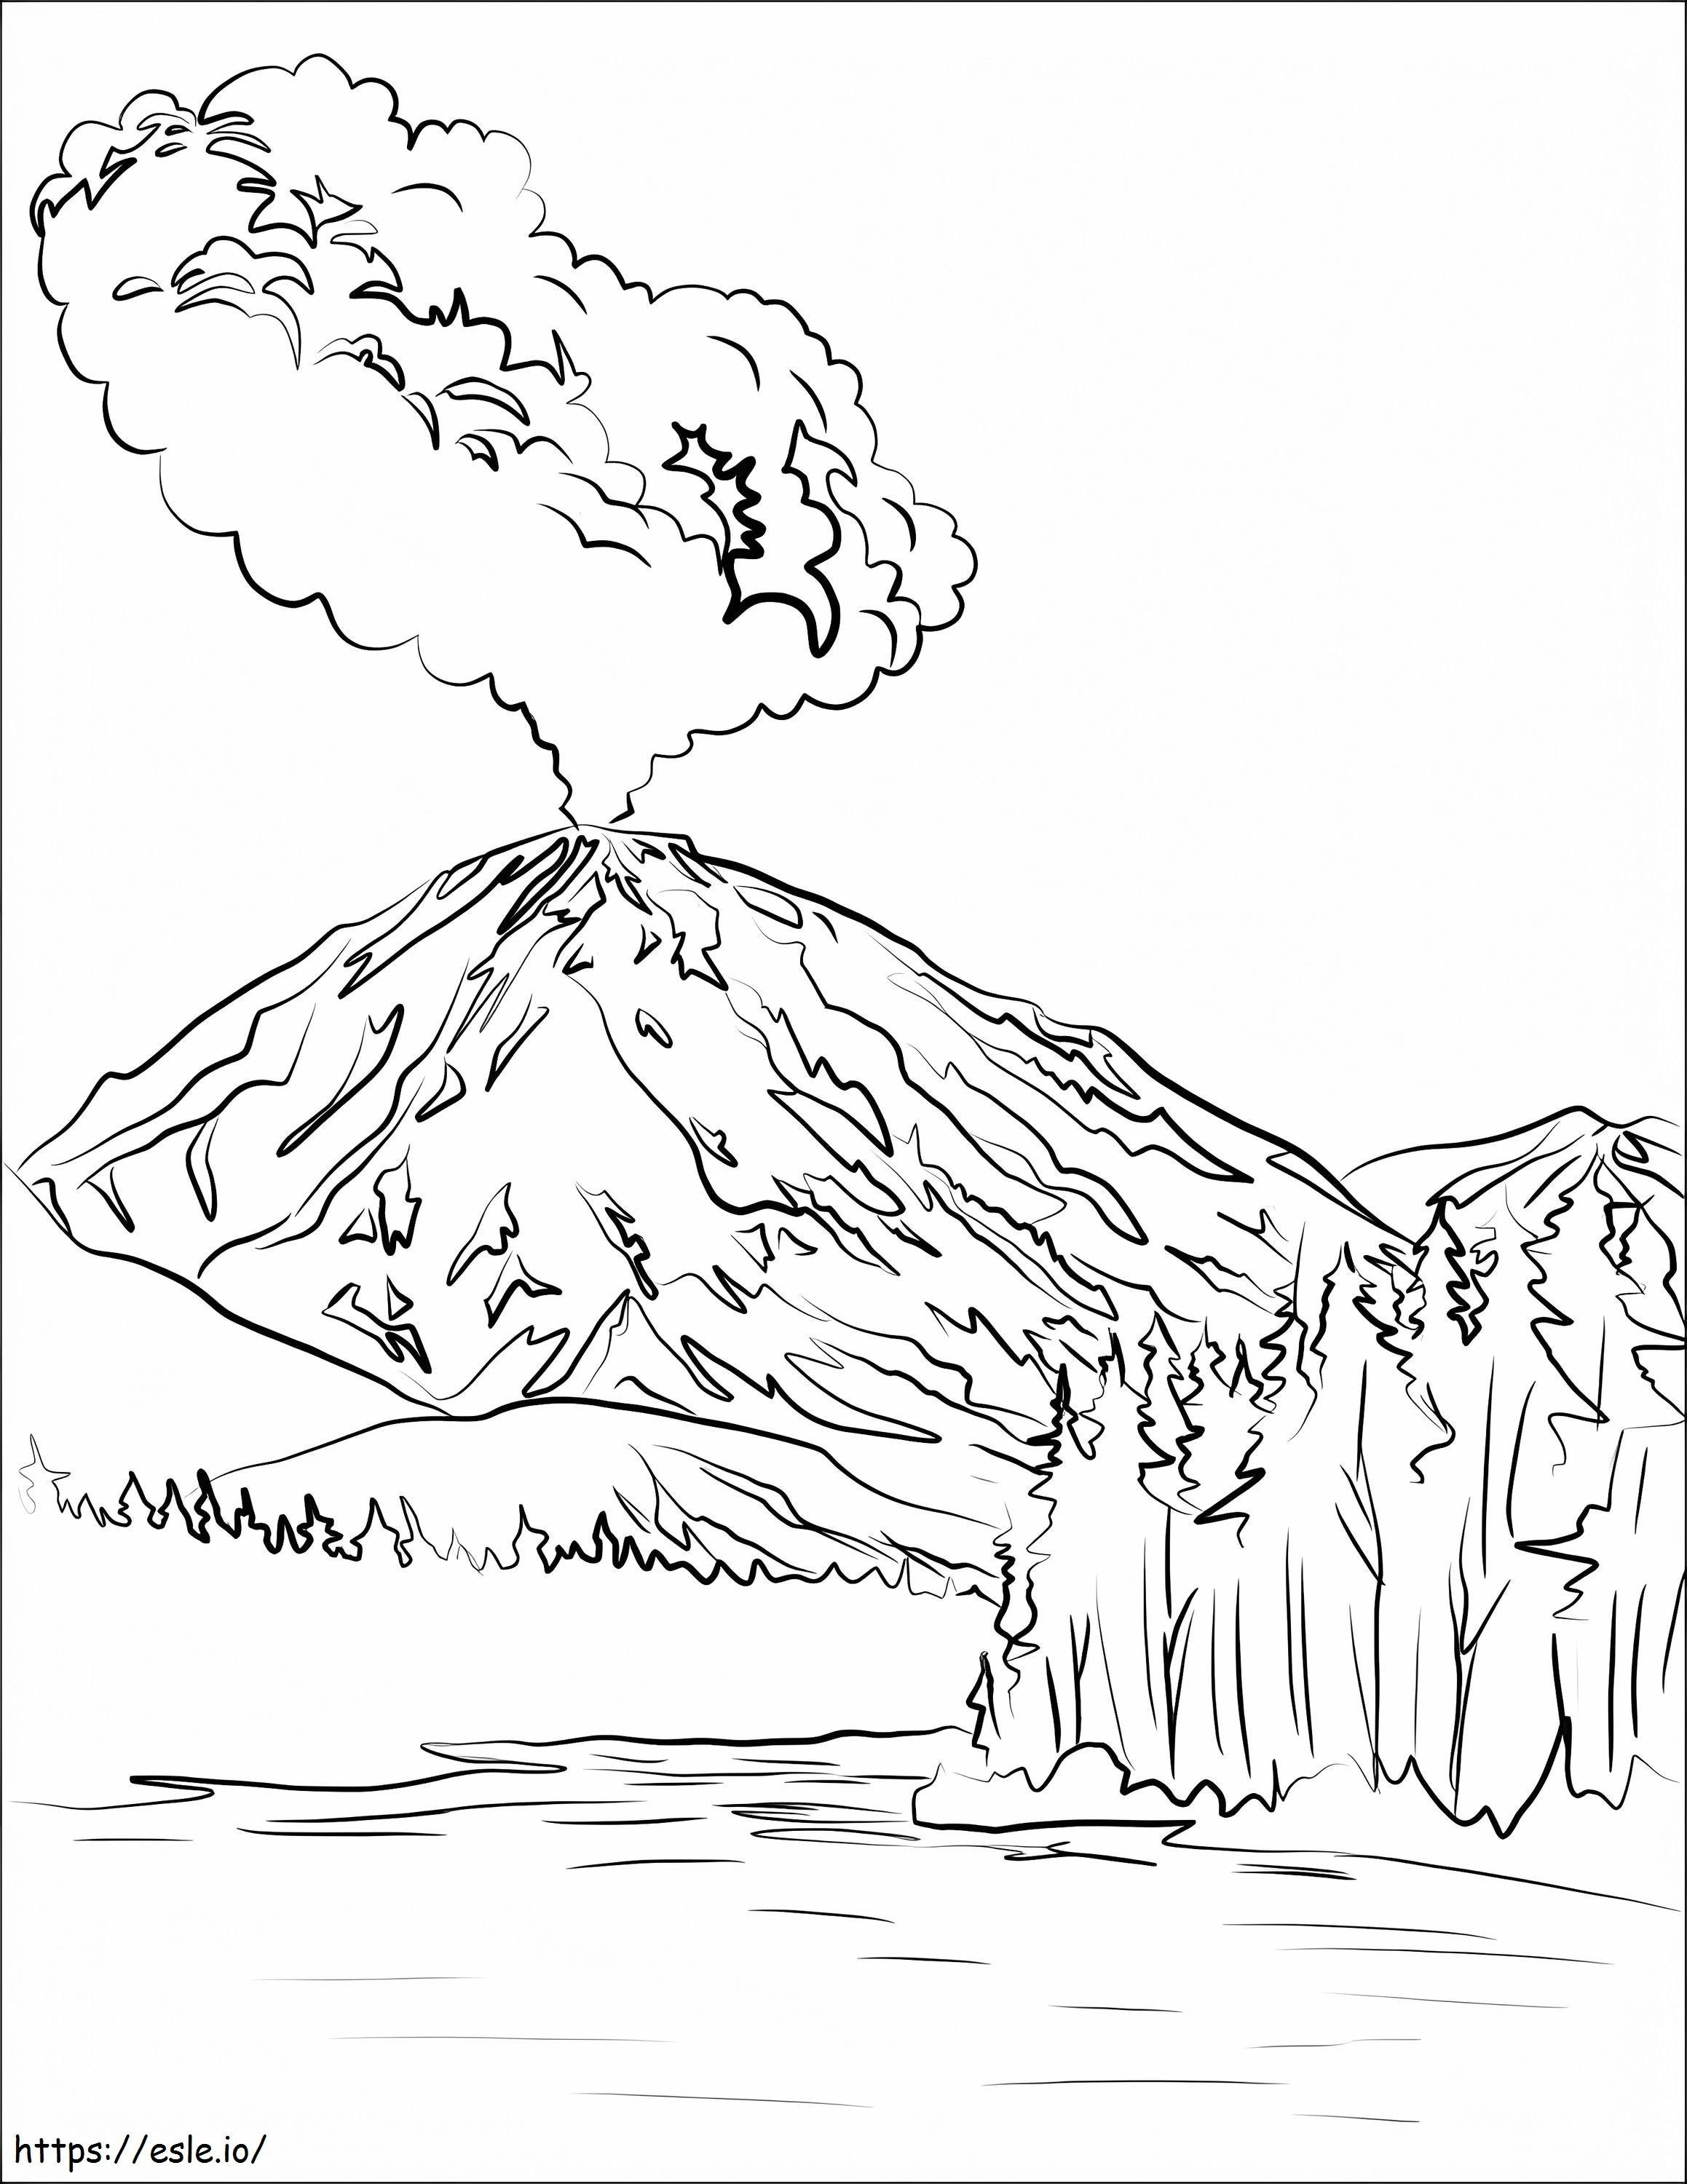 Lassen Peak Volcano Eruption coloring page